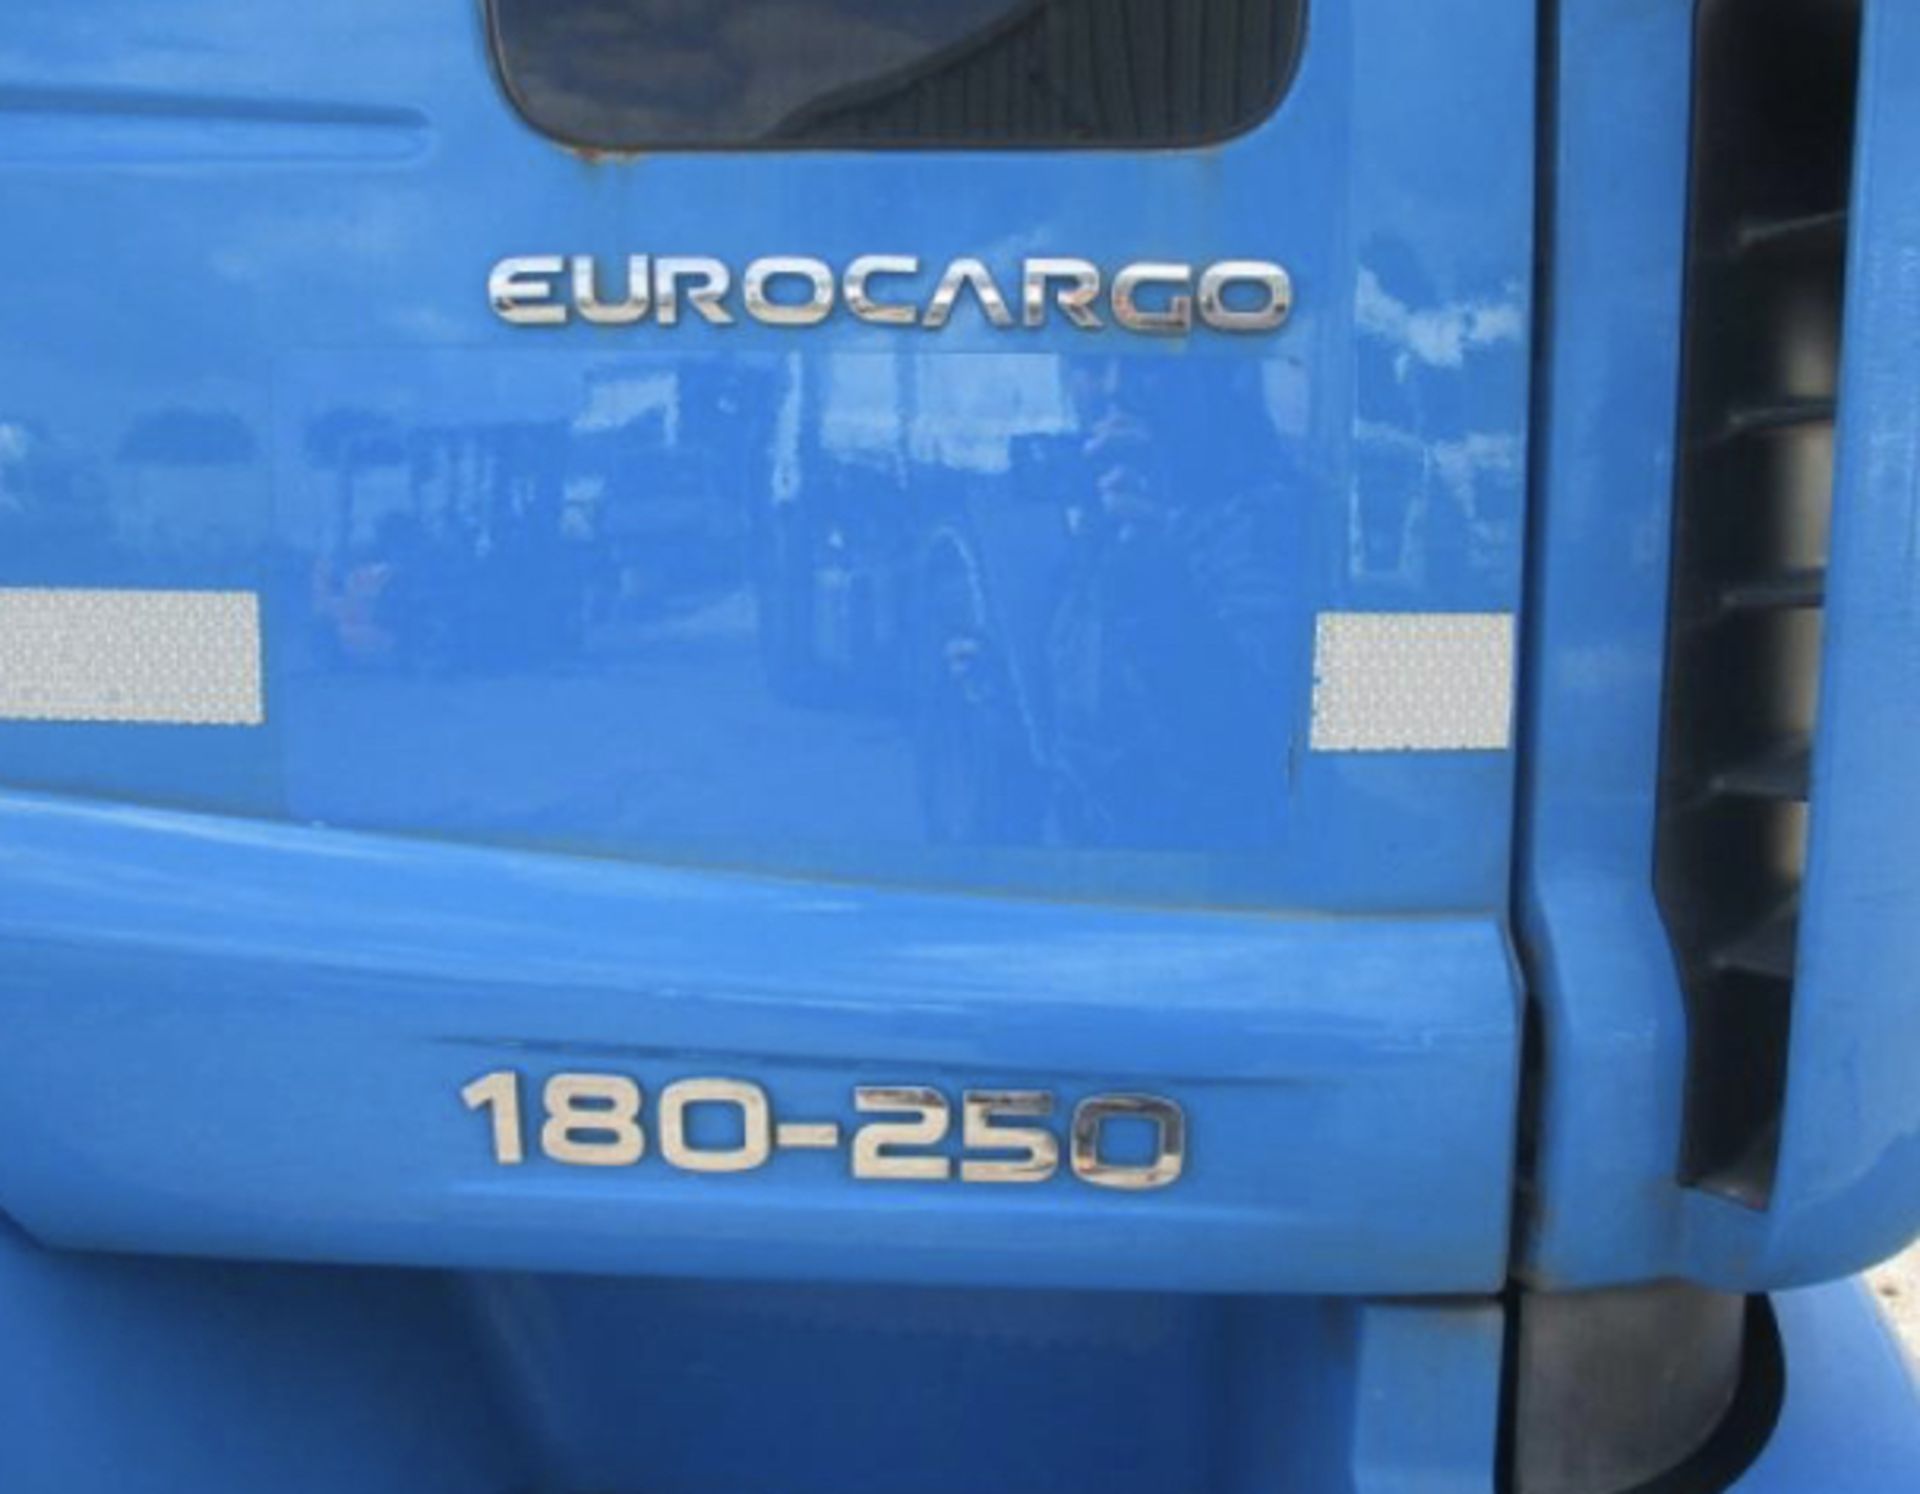 2016 IVECO EUROCARGO 180-250 - Image 3 of 15